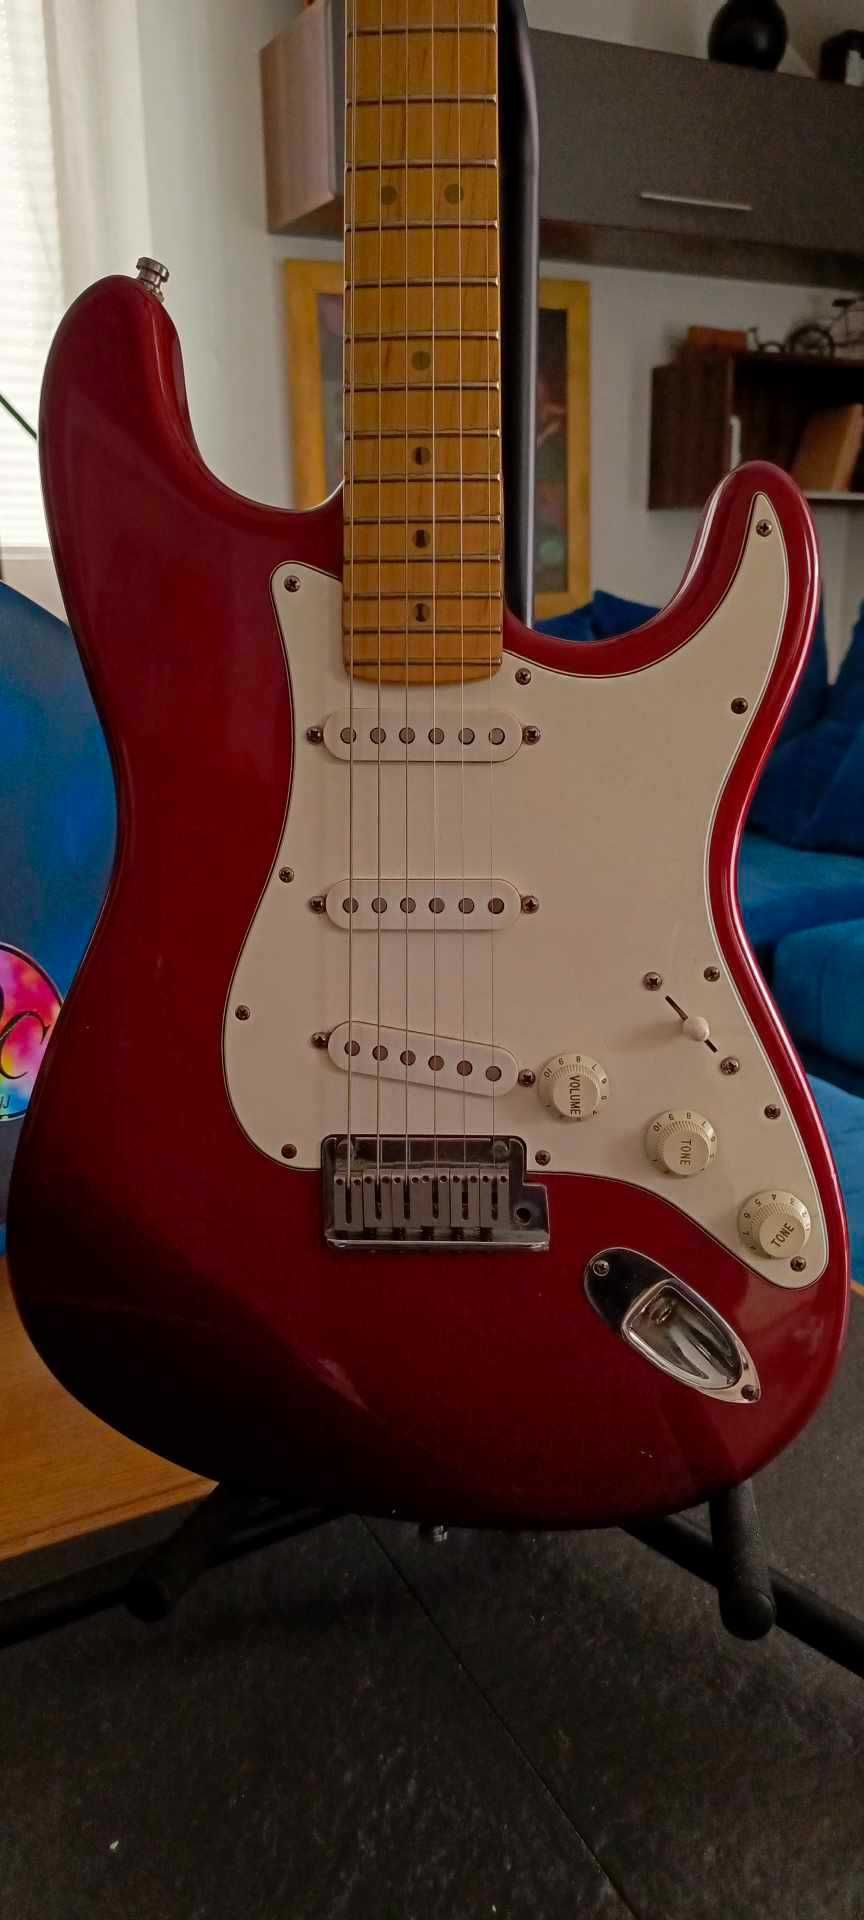 Fender Stratocaster USA Limited 200 sztuk na Świecie Oryginalny FSR